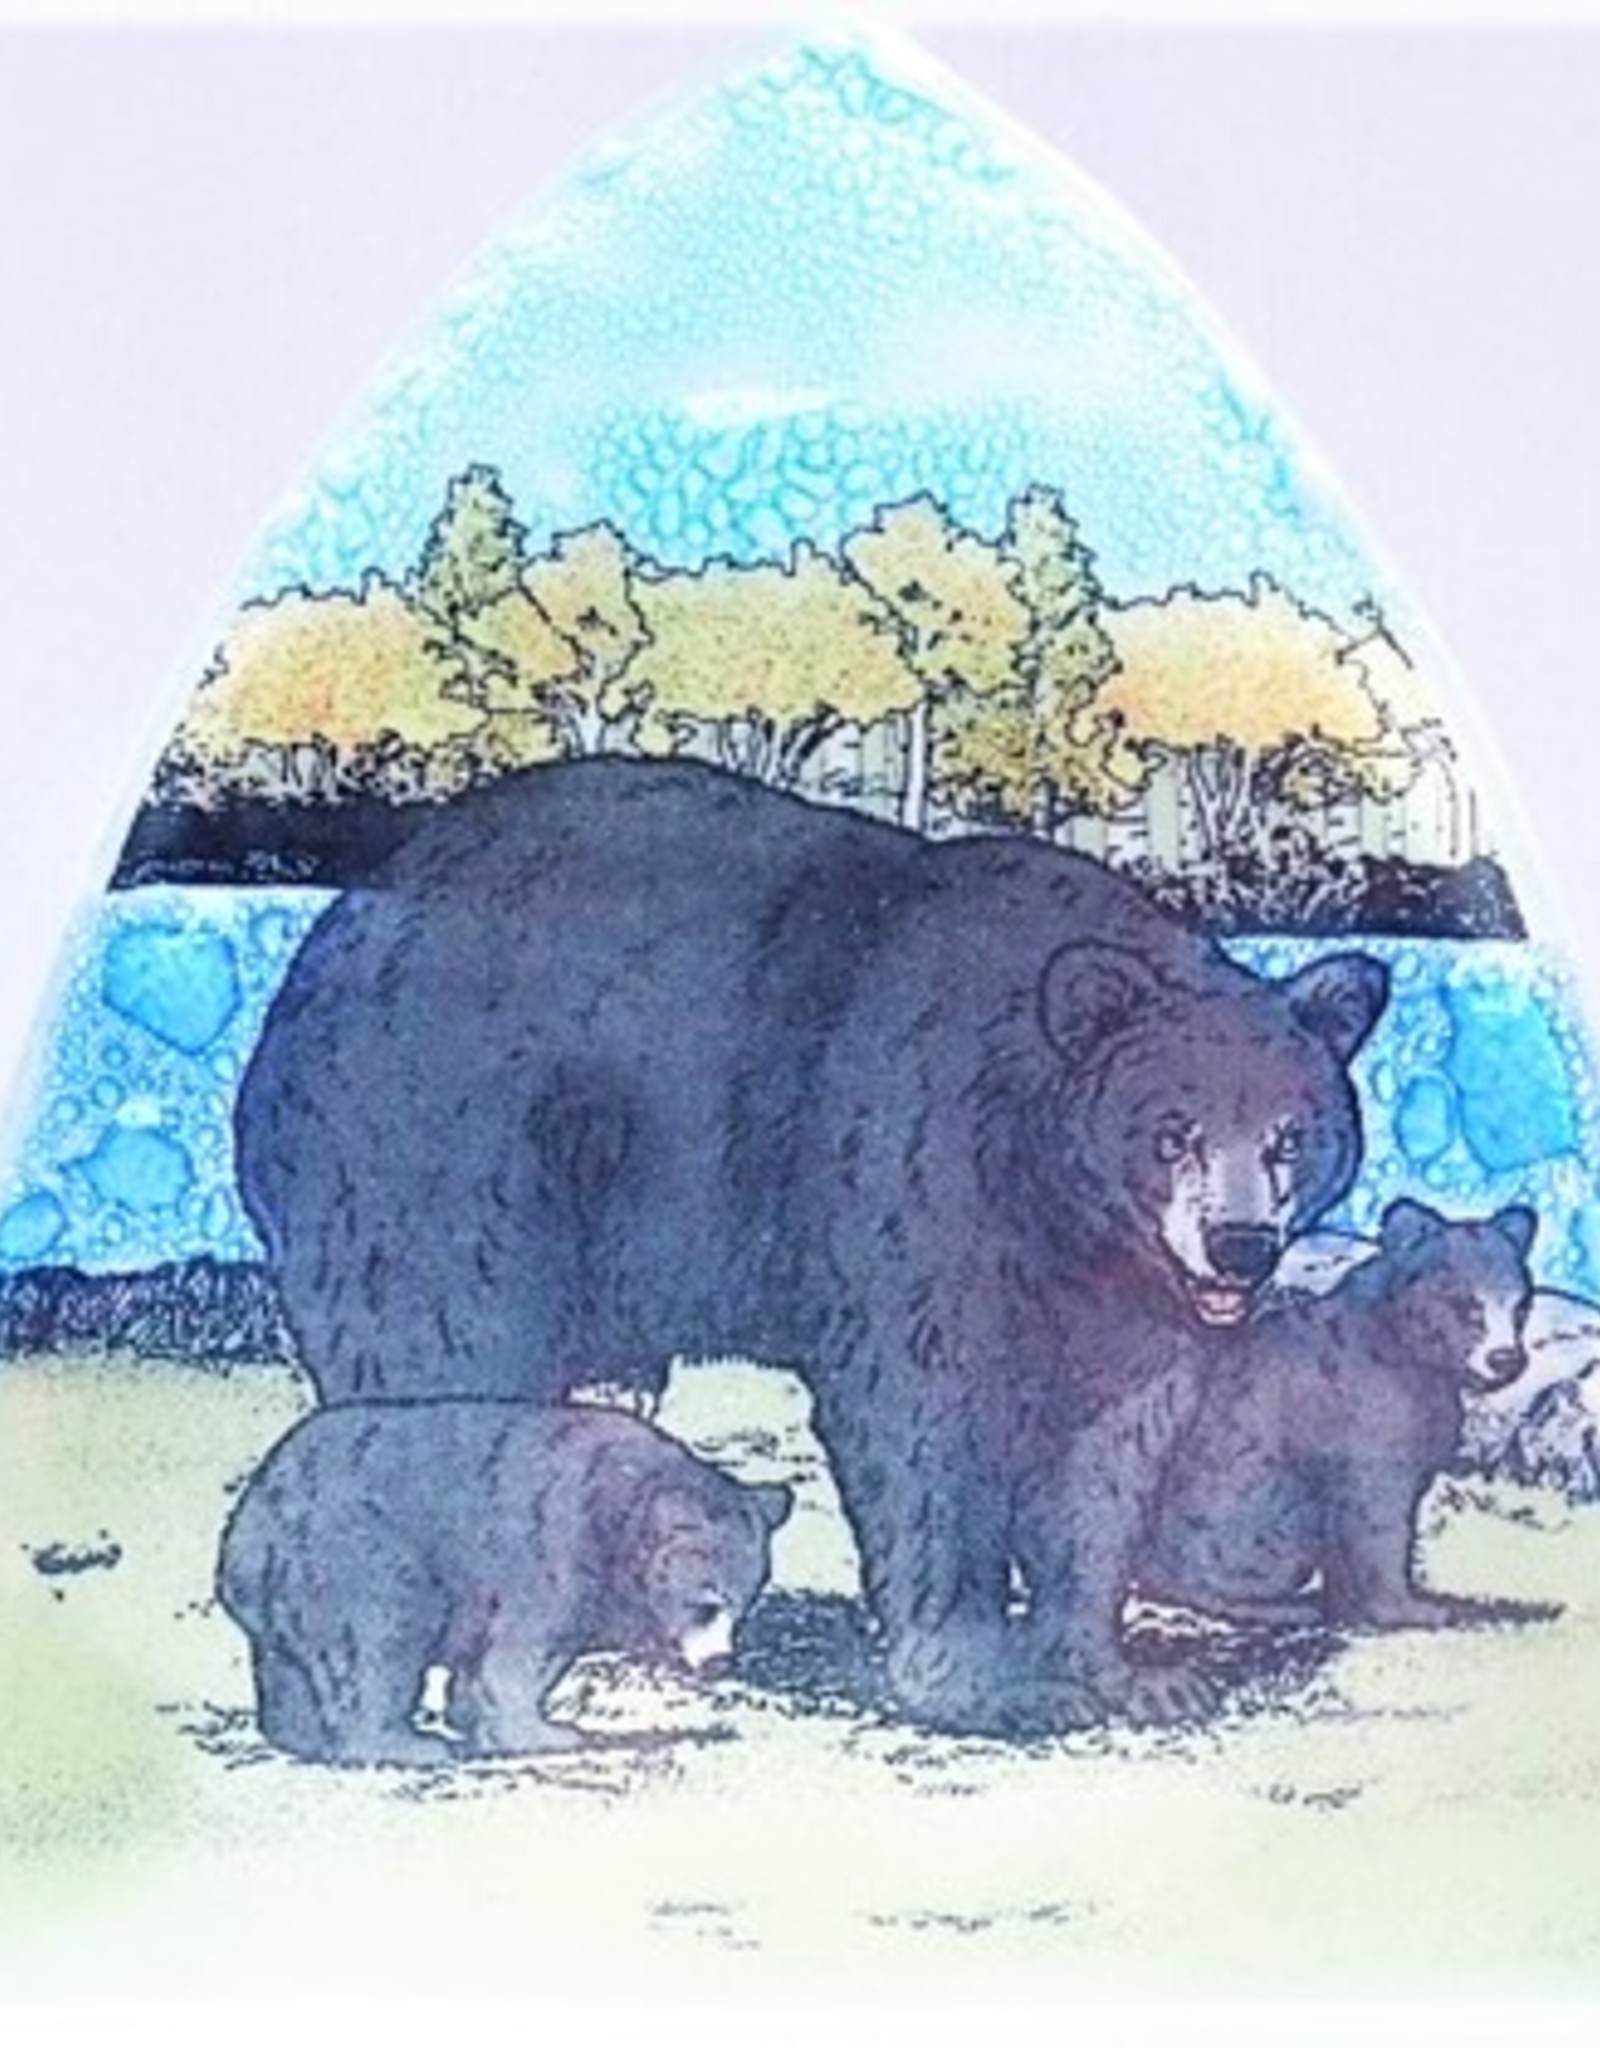 Pampeana Black Bear with Cubs Nightlight